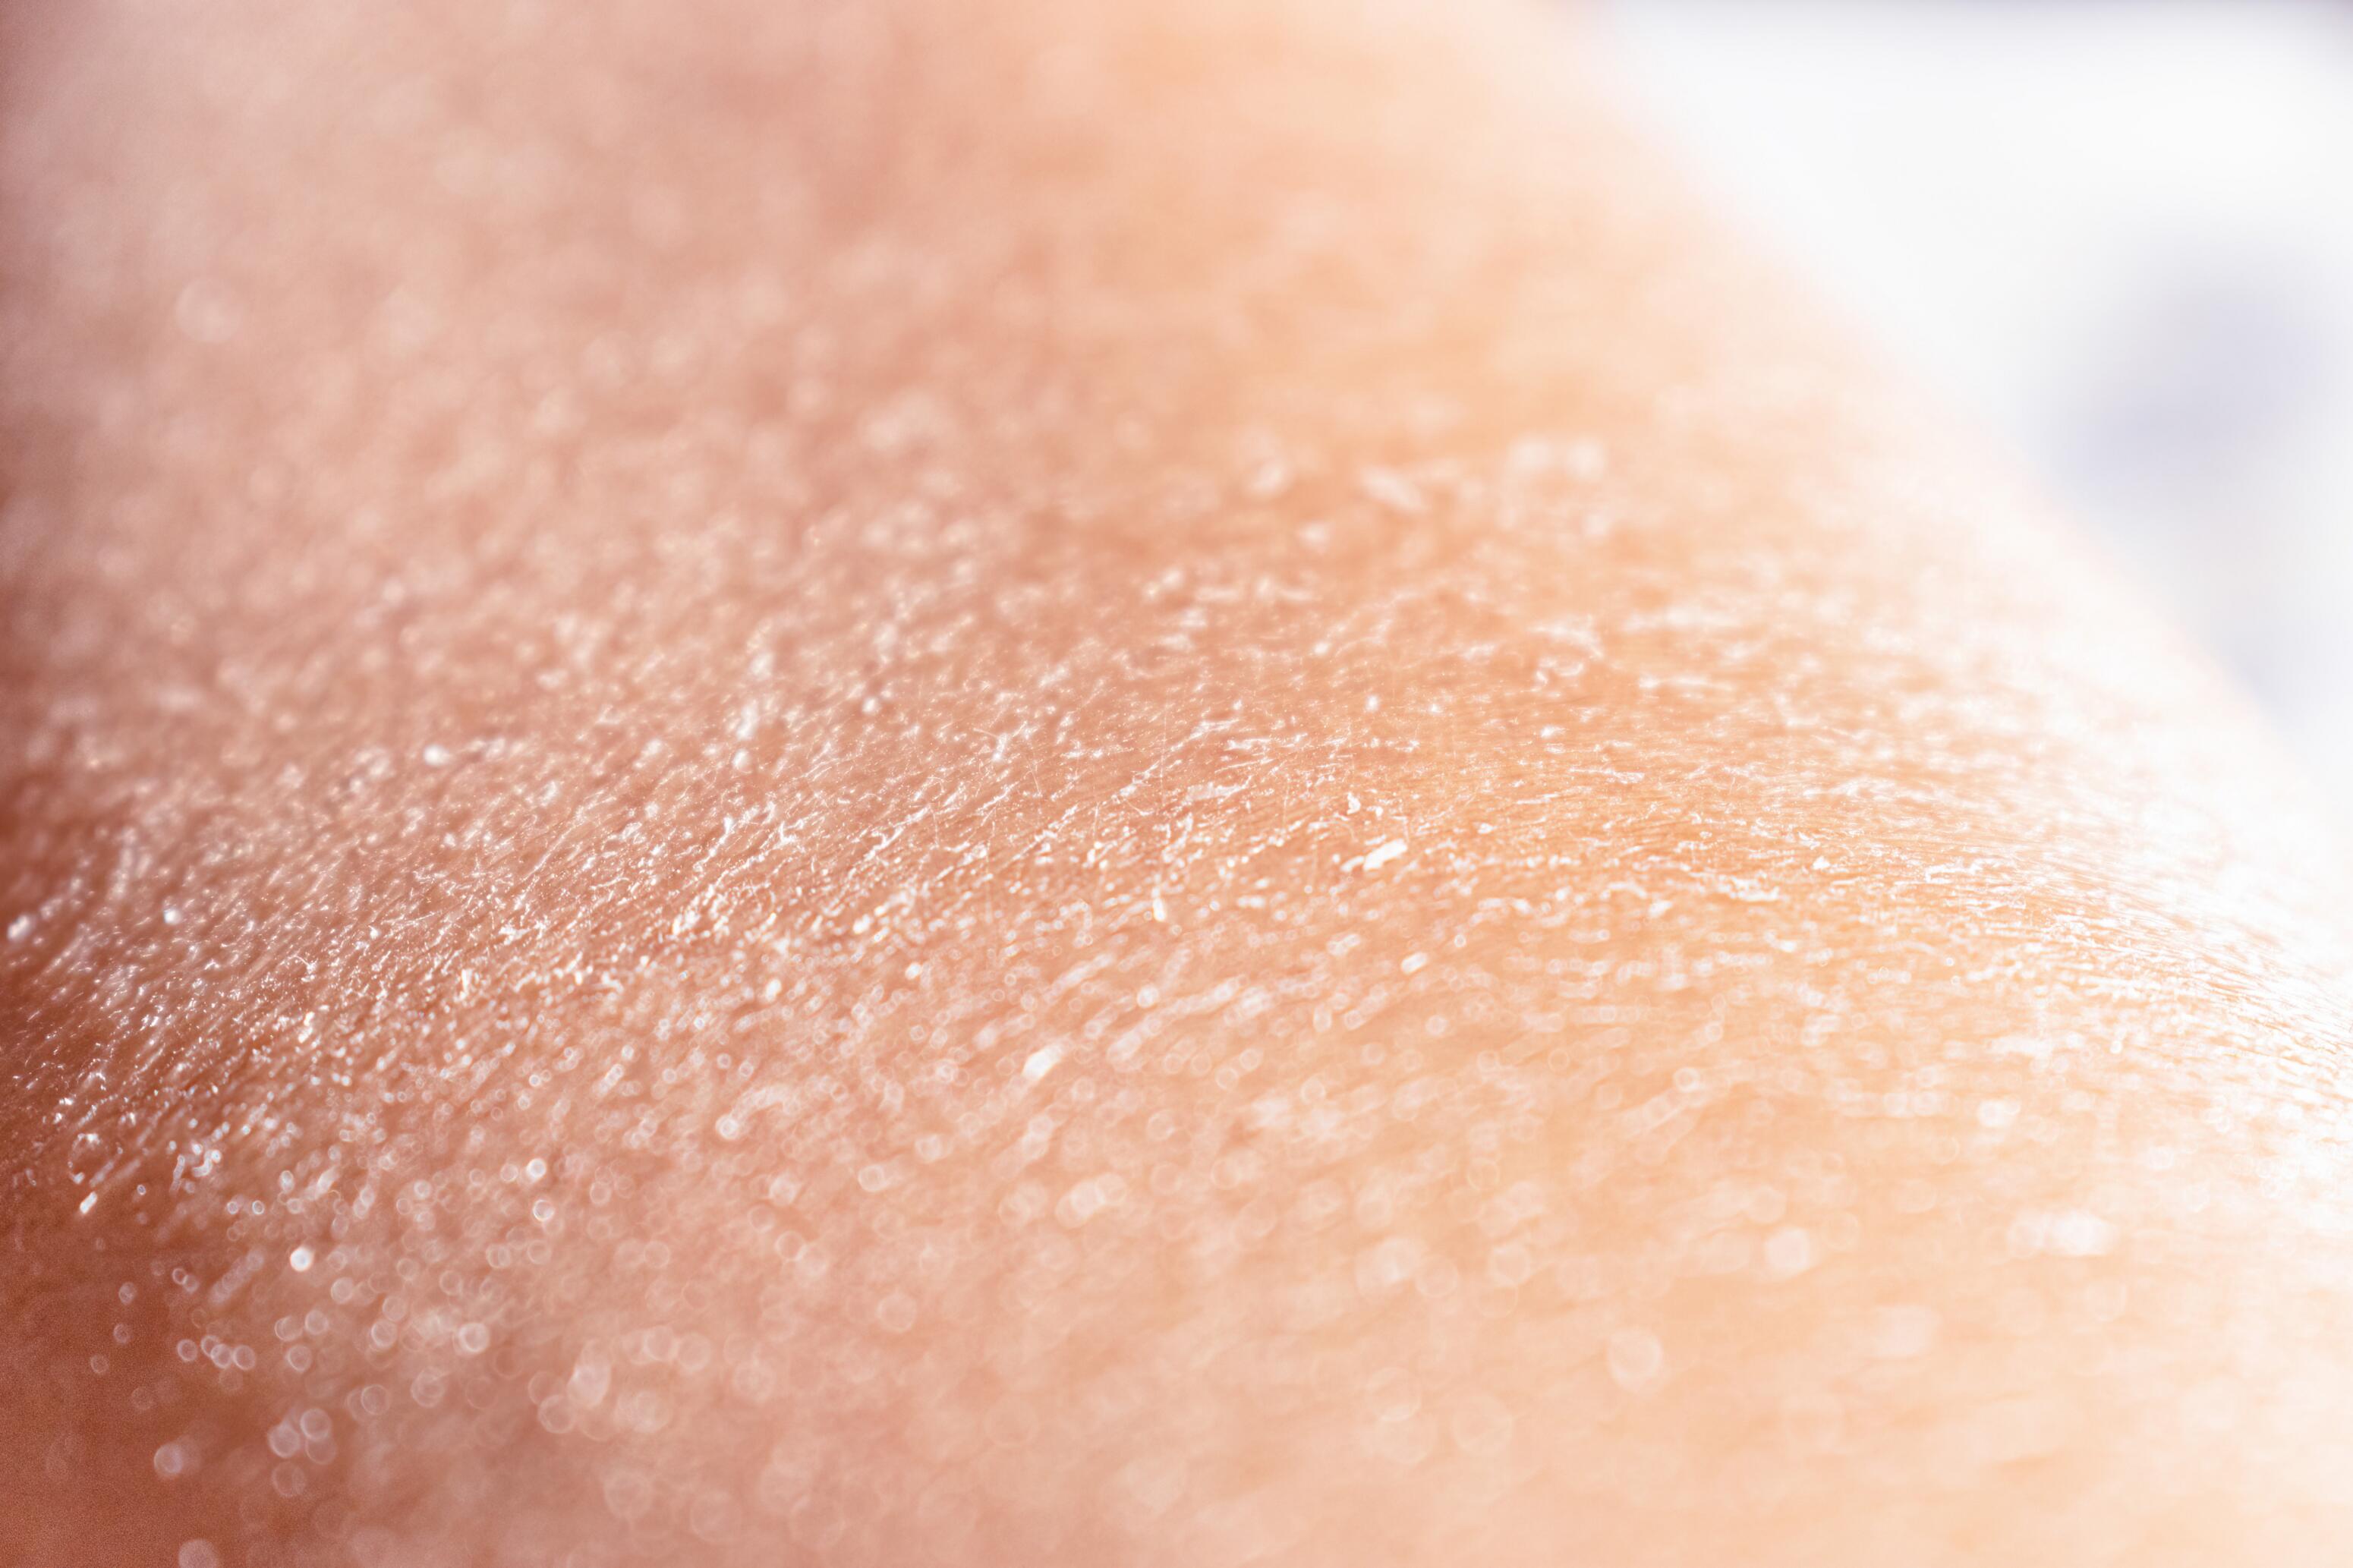 Dry skin or xerosis